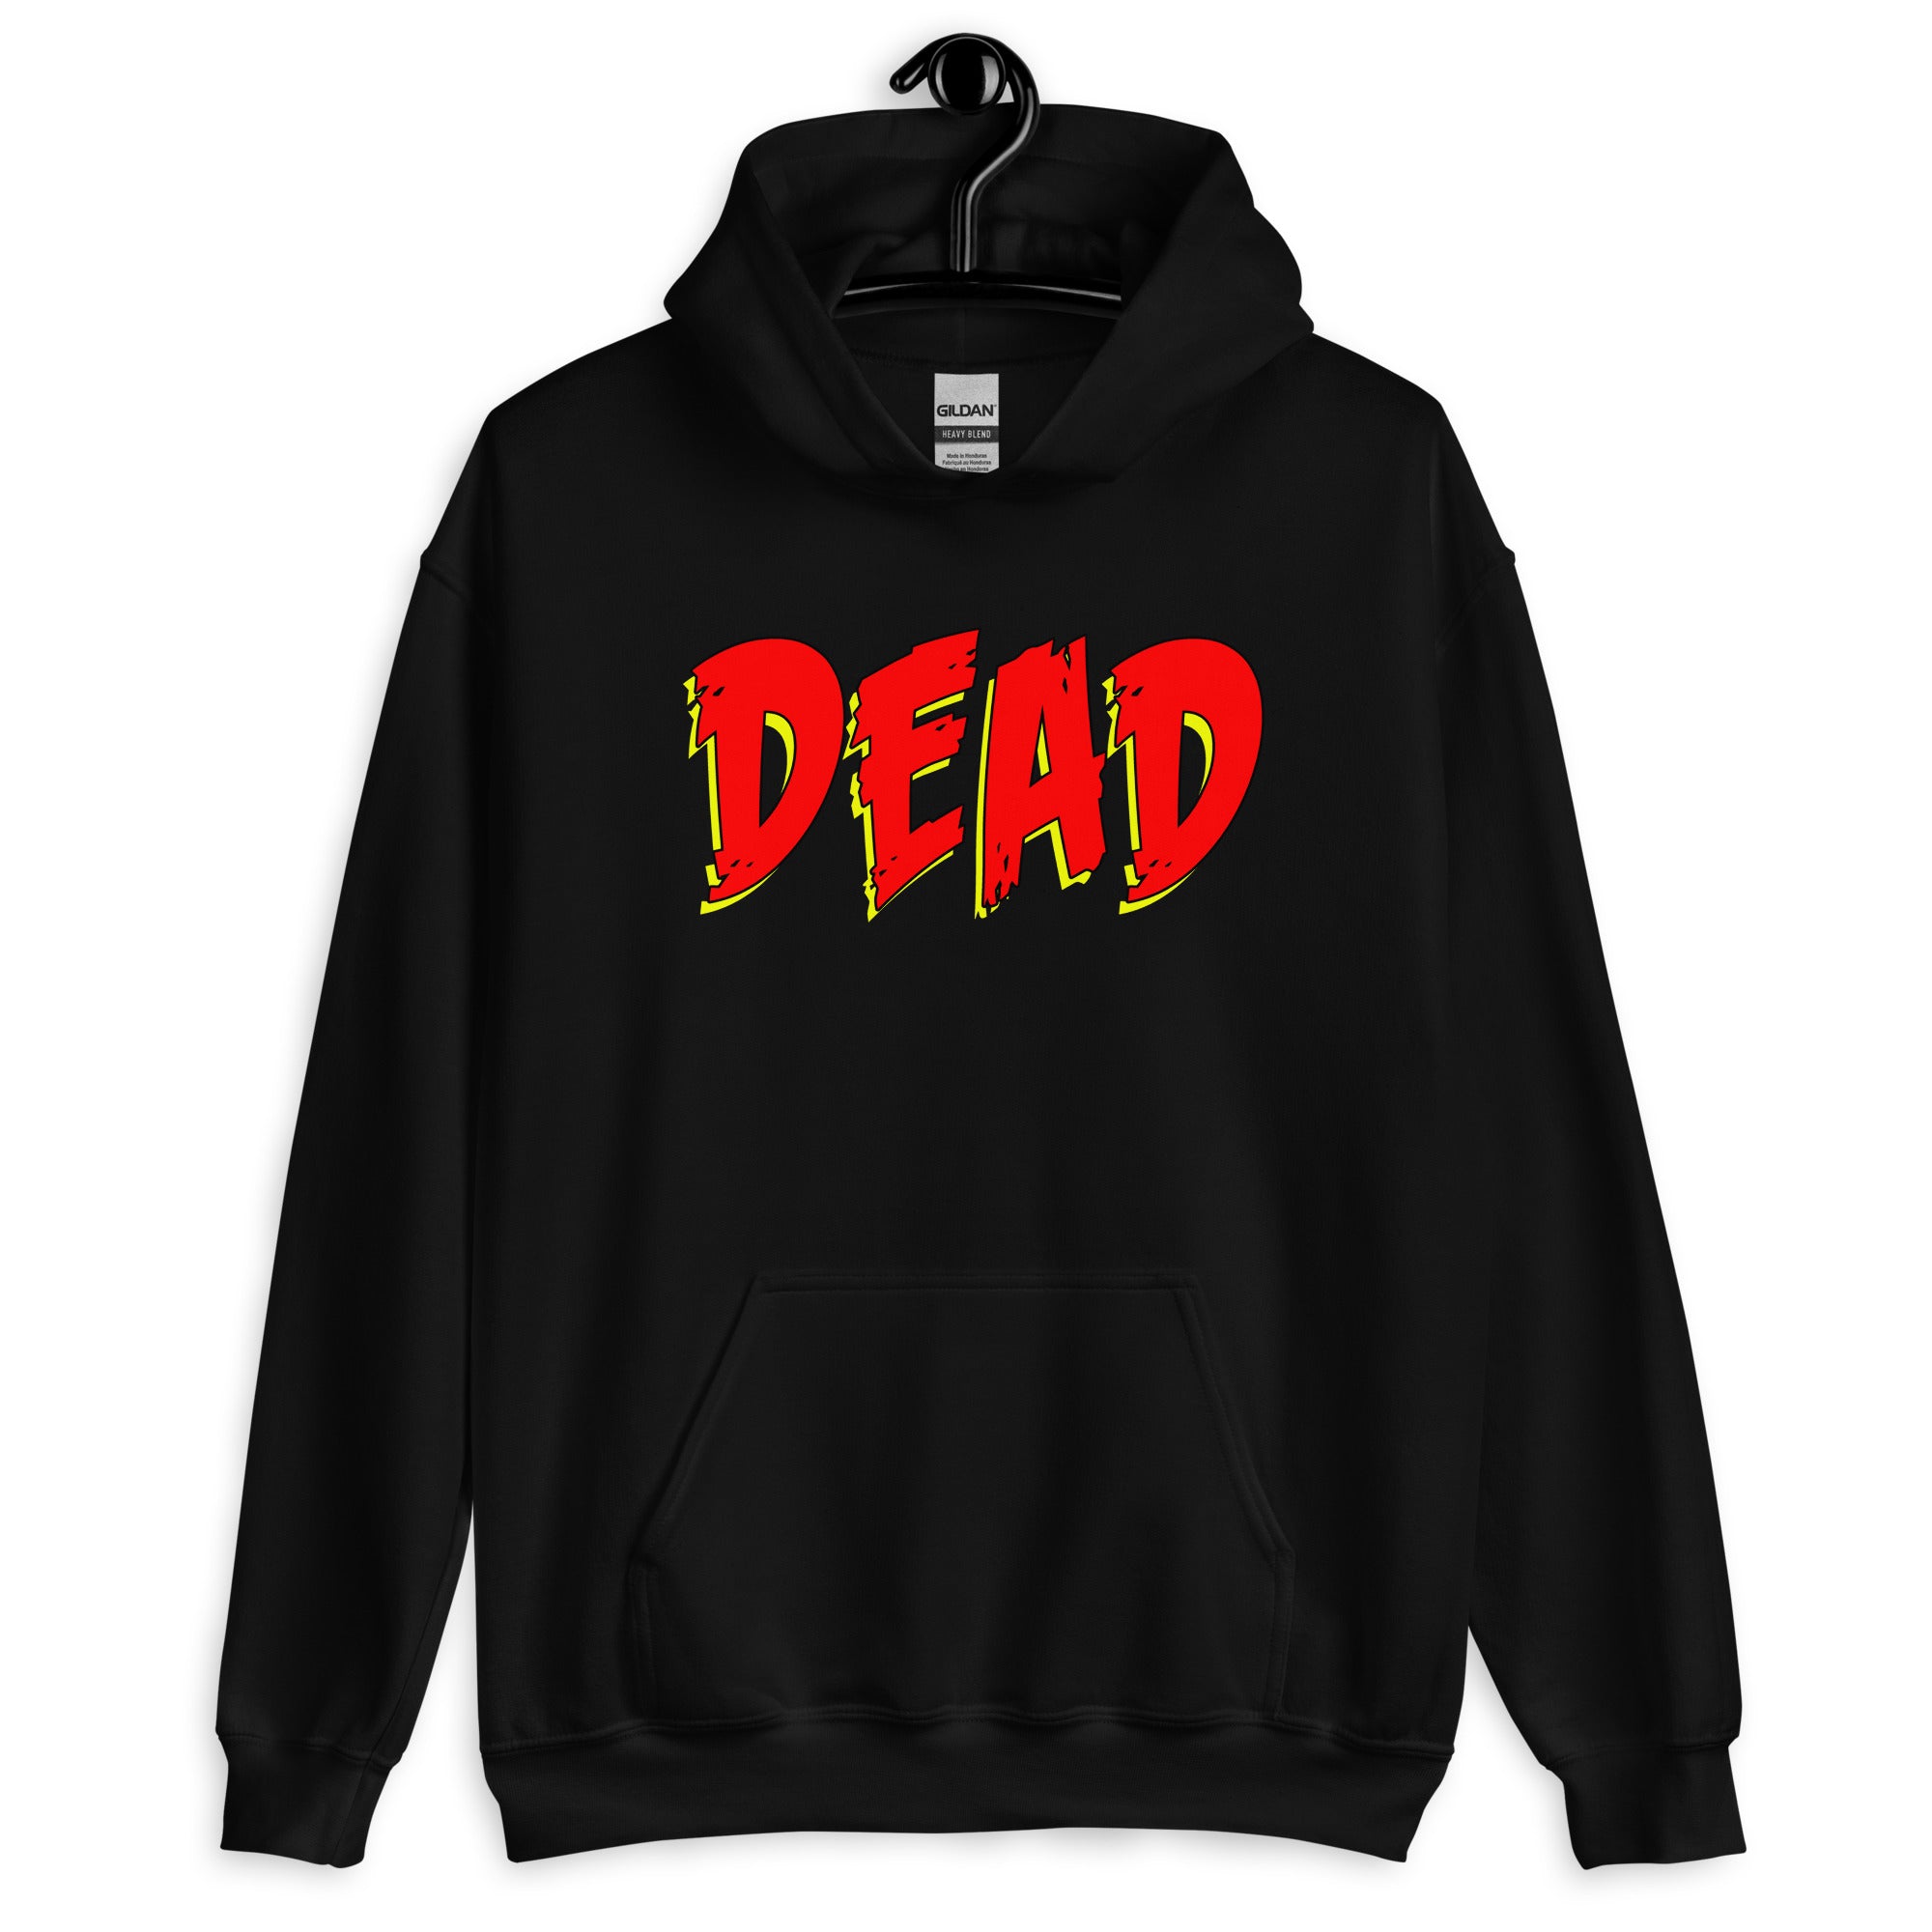 Dead Depressed Gothic Emo Style Unisex Hoodie Sweatshirt